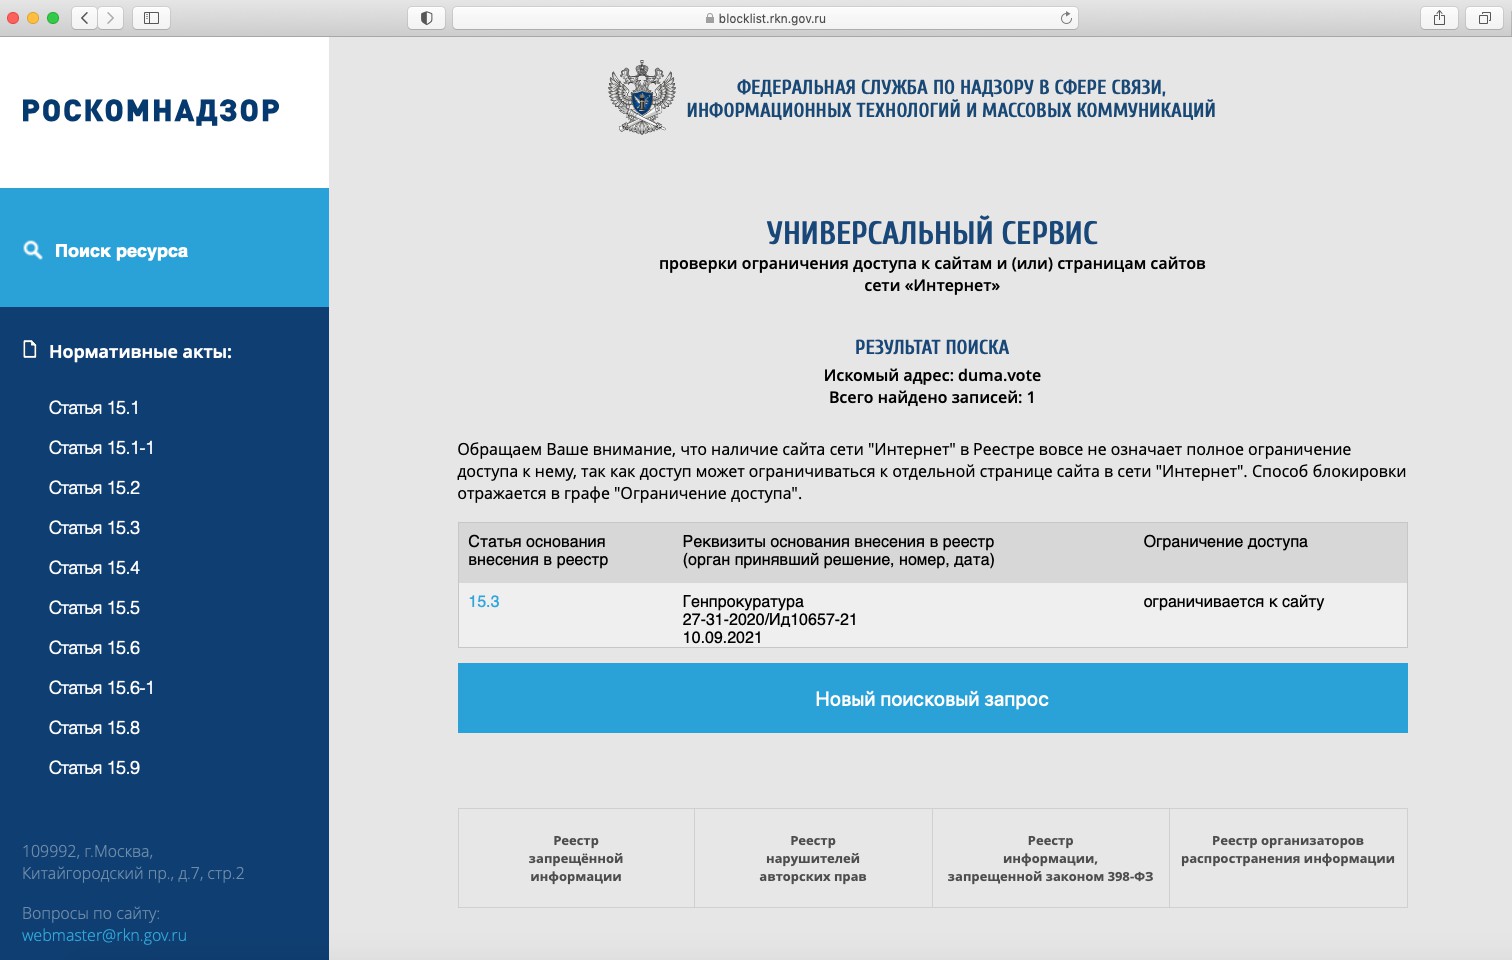 Скриншот: https://blocklist.rkn.gov.ru